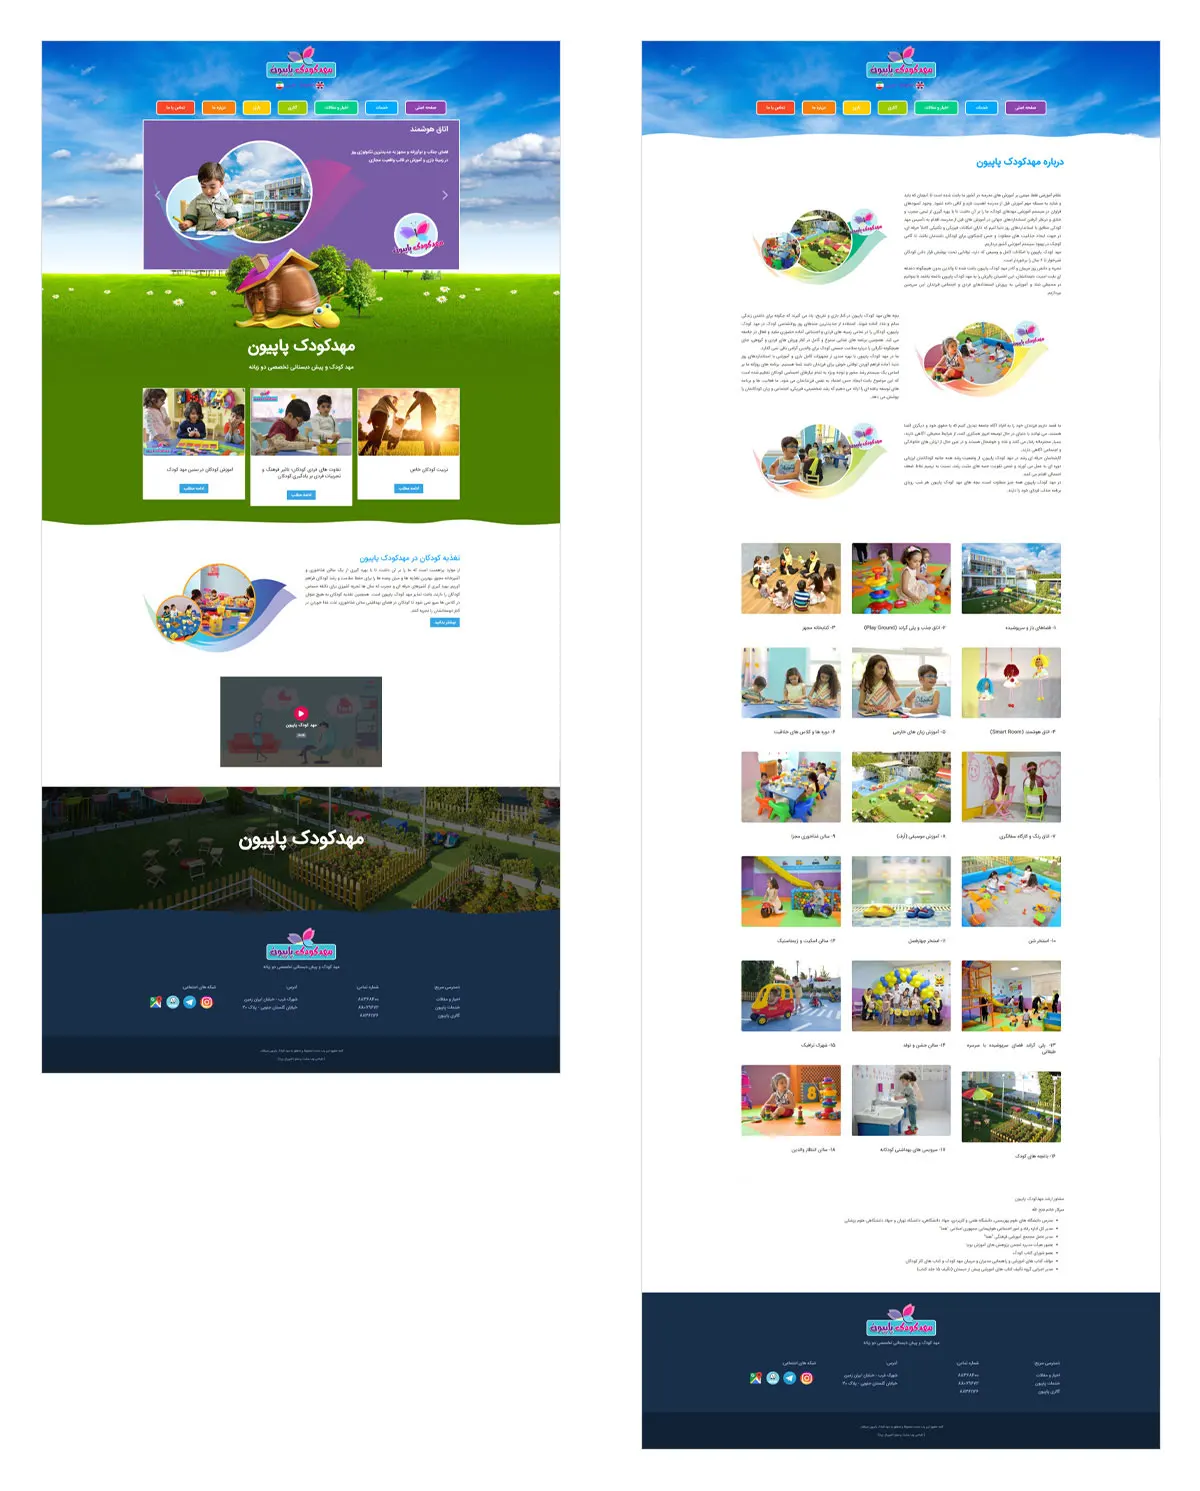 Papillon Kindergarten website development | Hossein Donyadideh